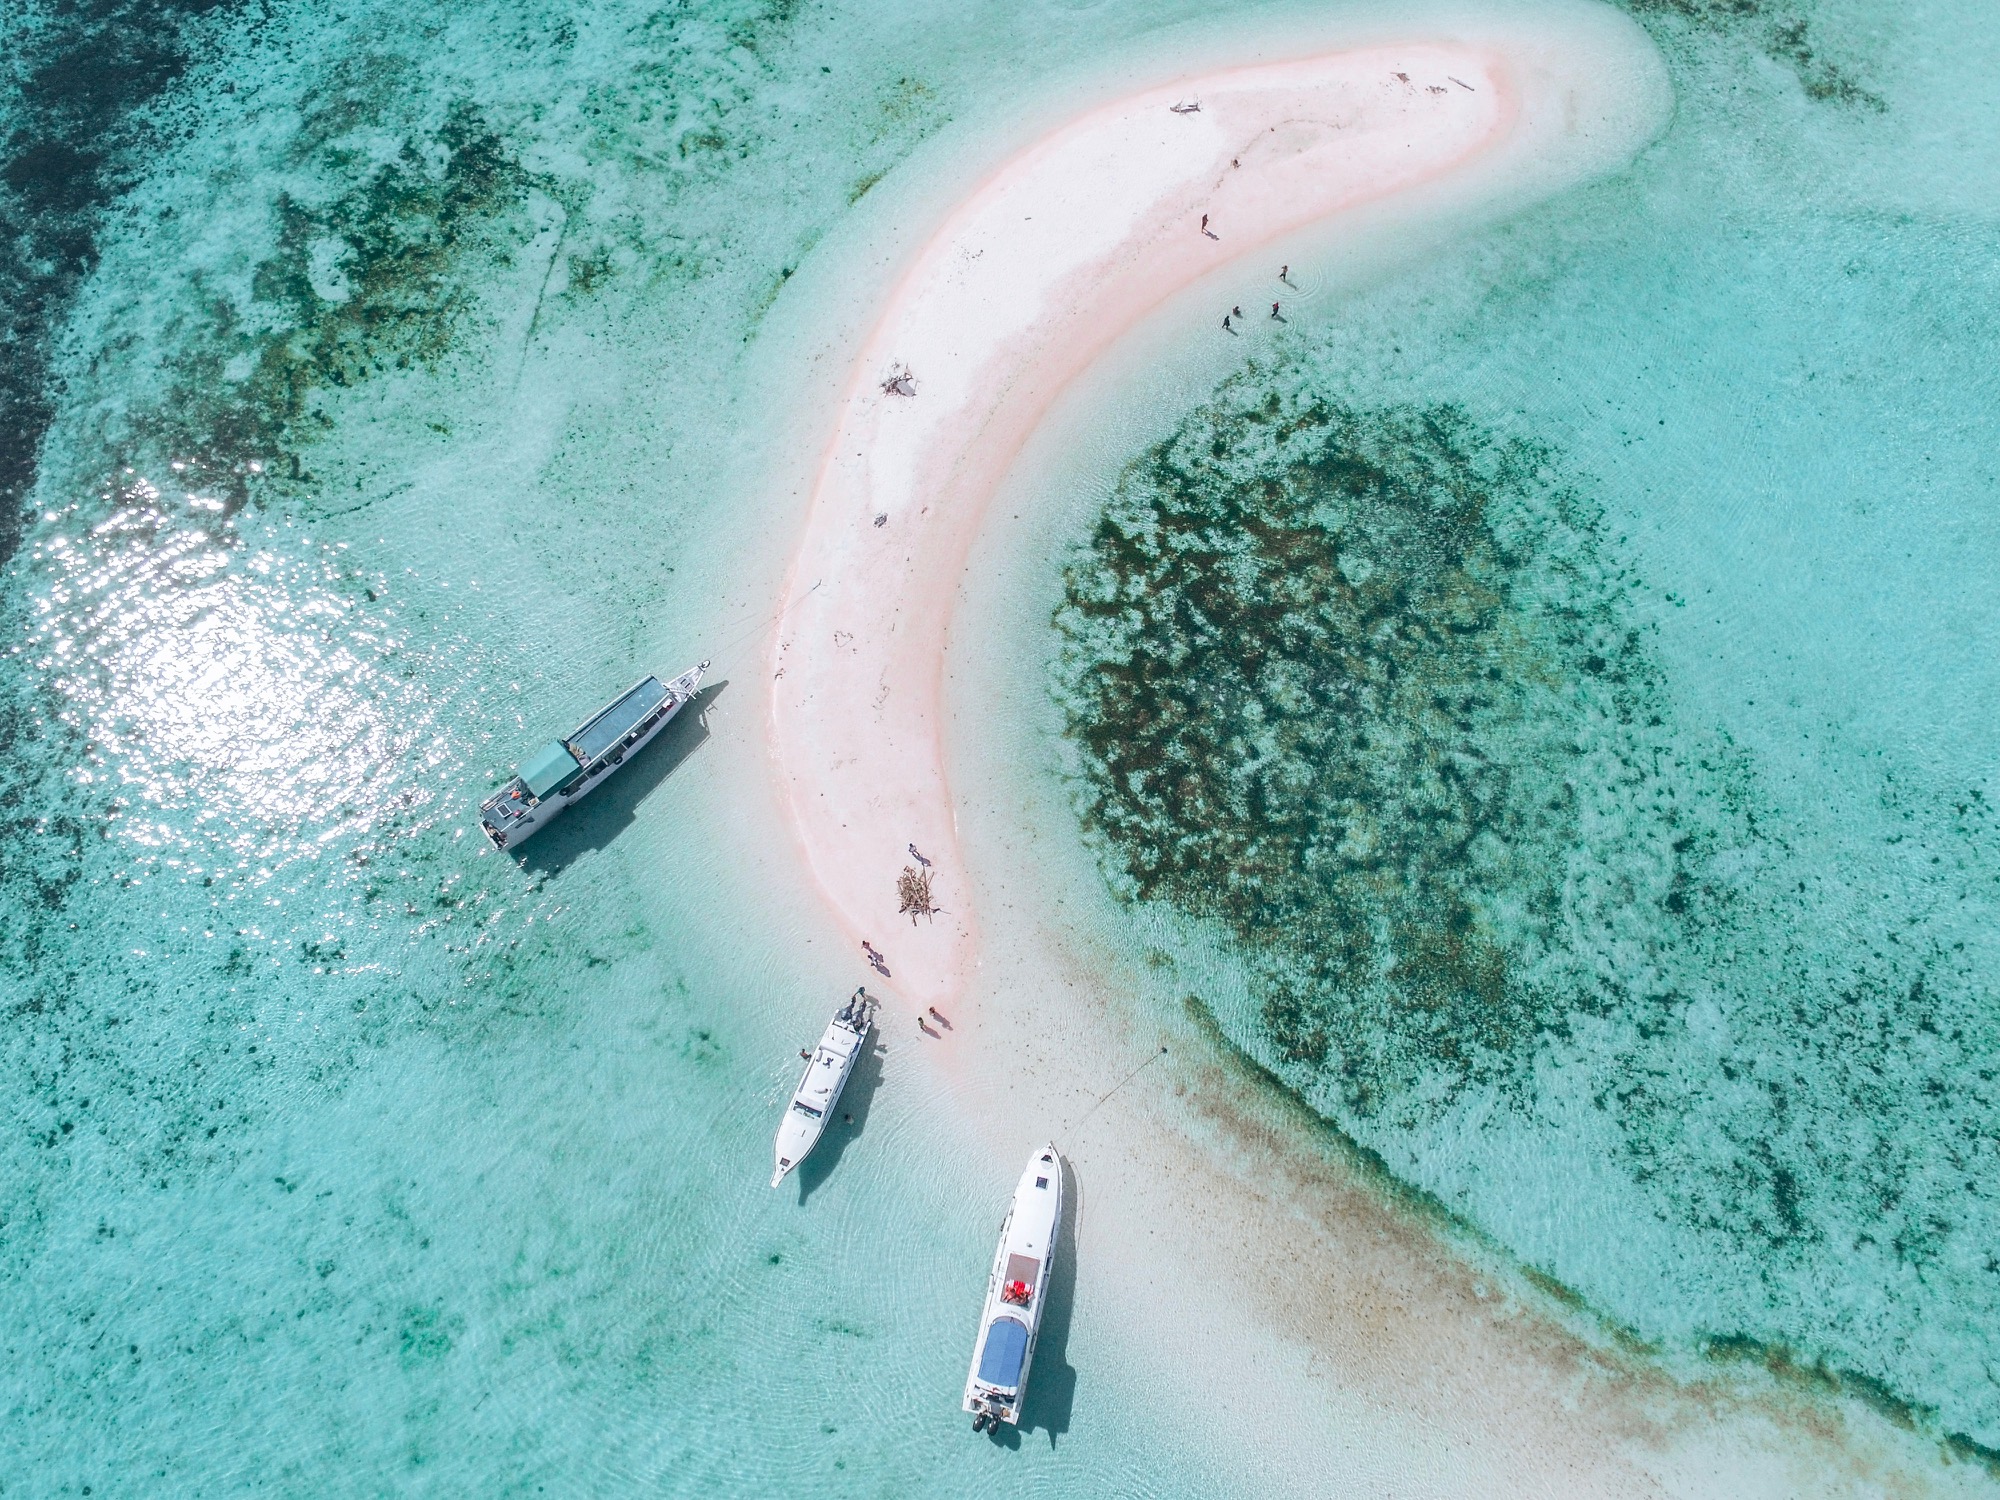 Taka Makassar DJI Drone Shot - Komodo Island - Flores - Indonesia